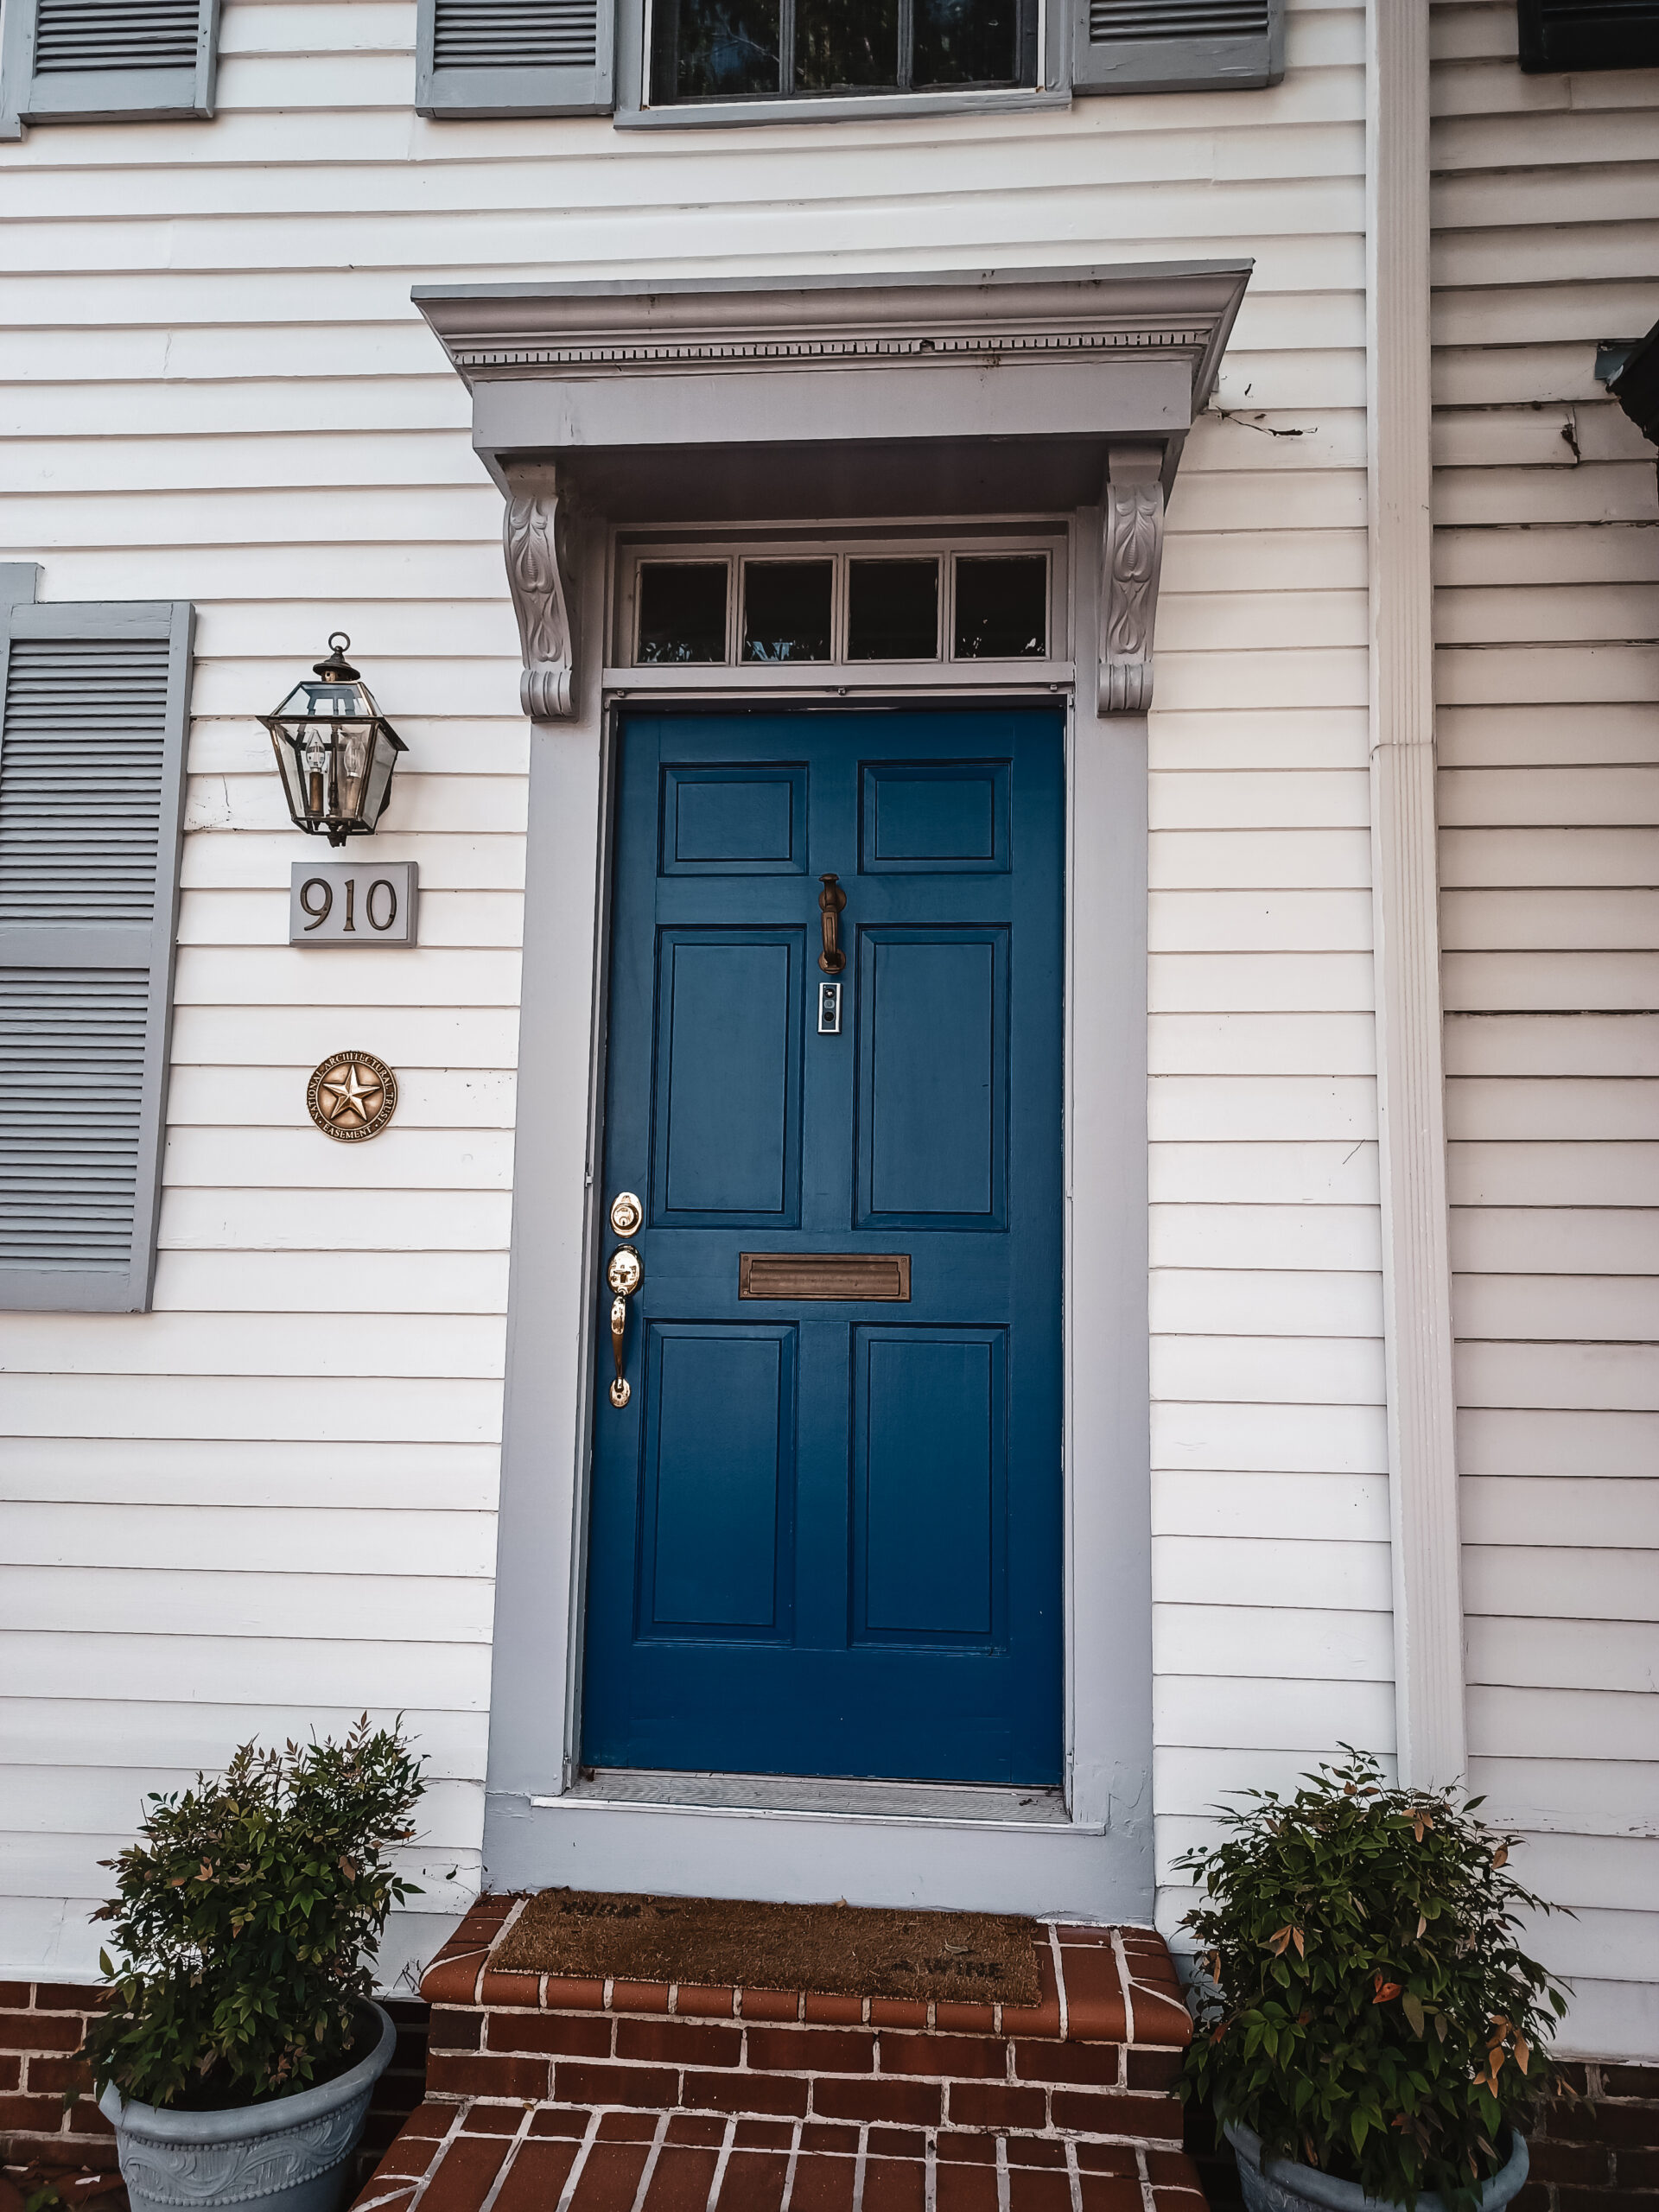 Alexandria Virginia home with blue door This Bahamian Gyal blog